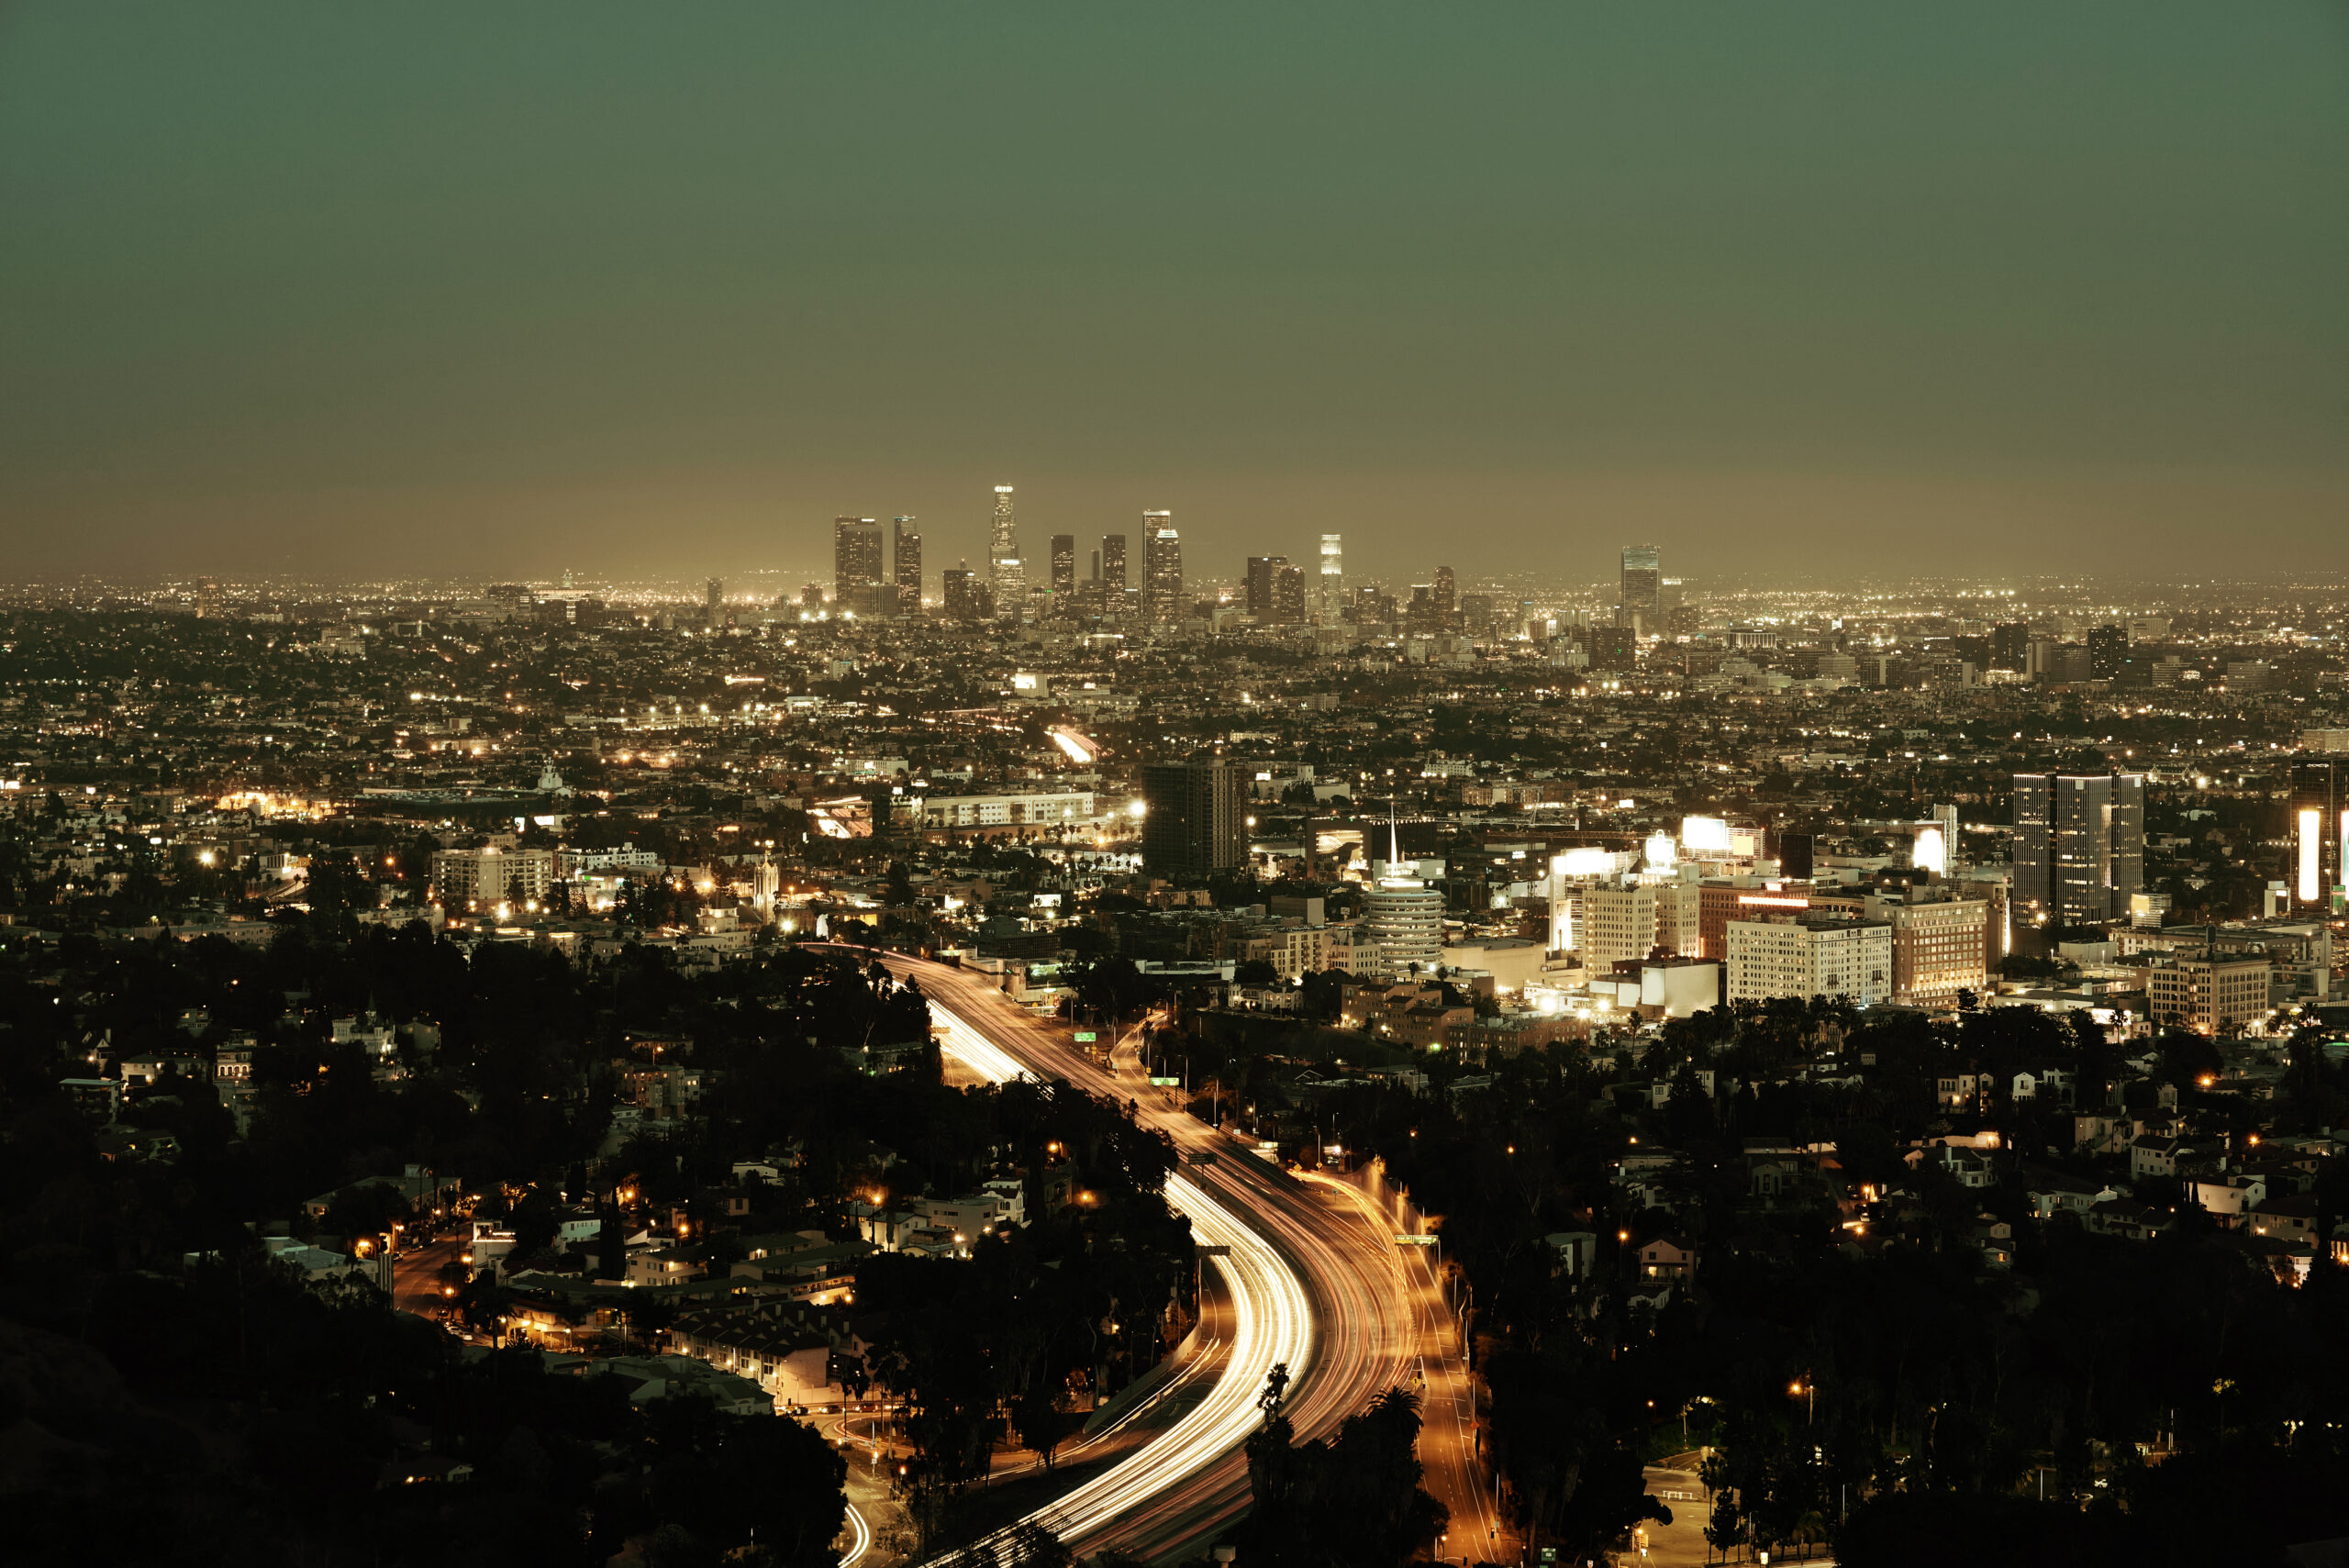 Los Angeles at night